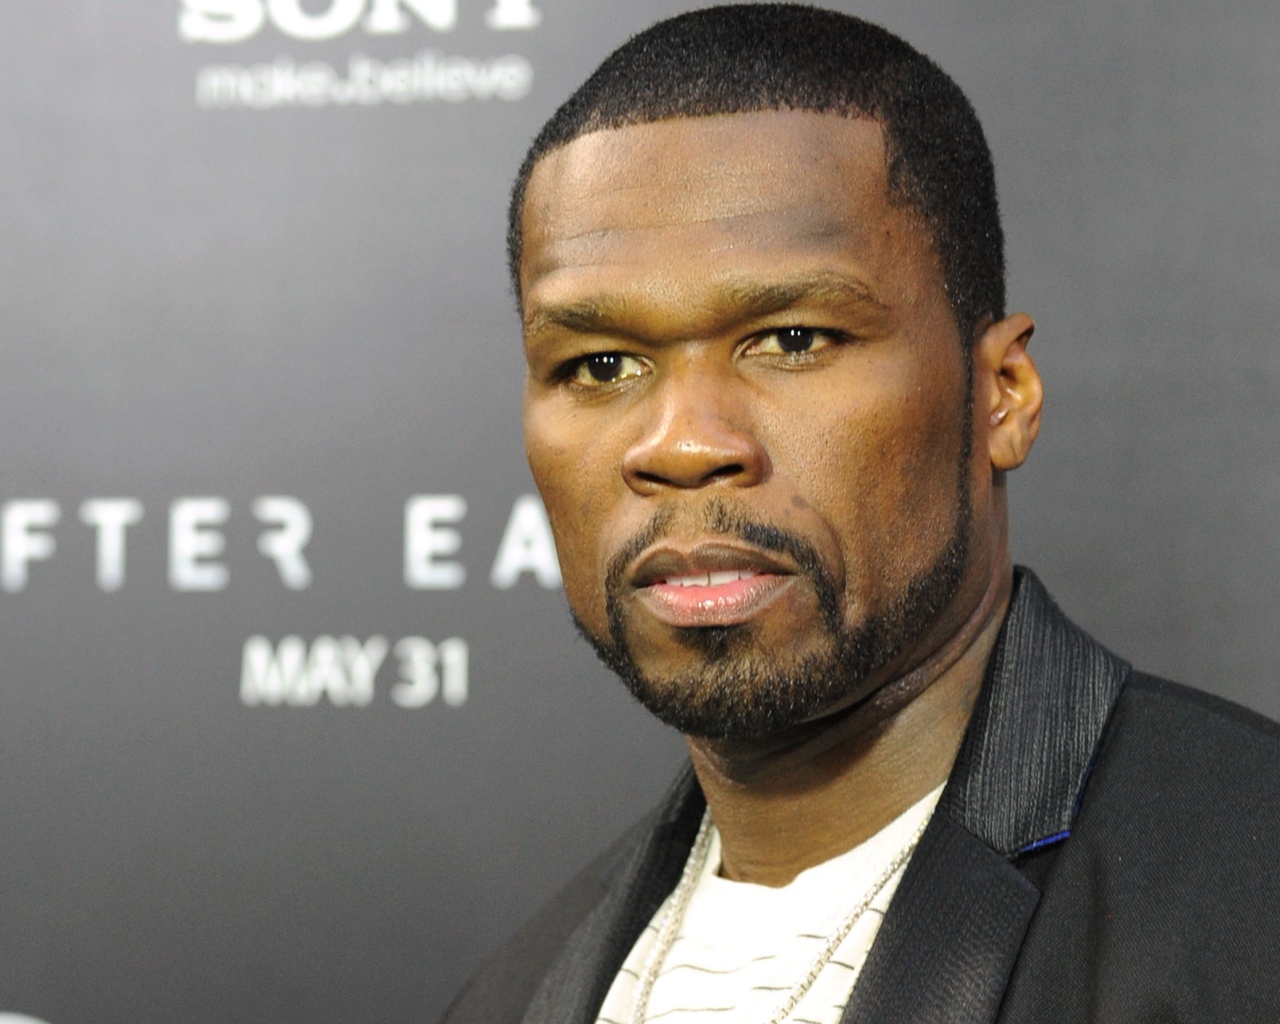 Знаменитый рэпер 50 Cent